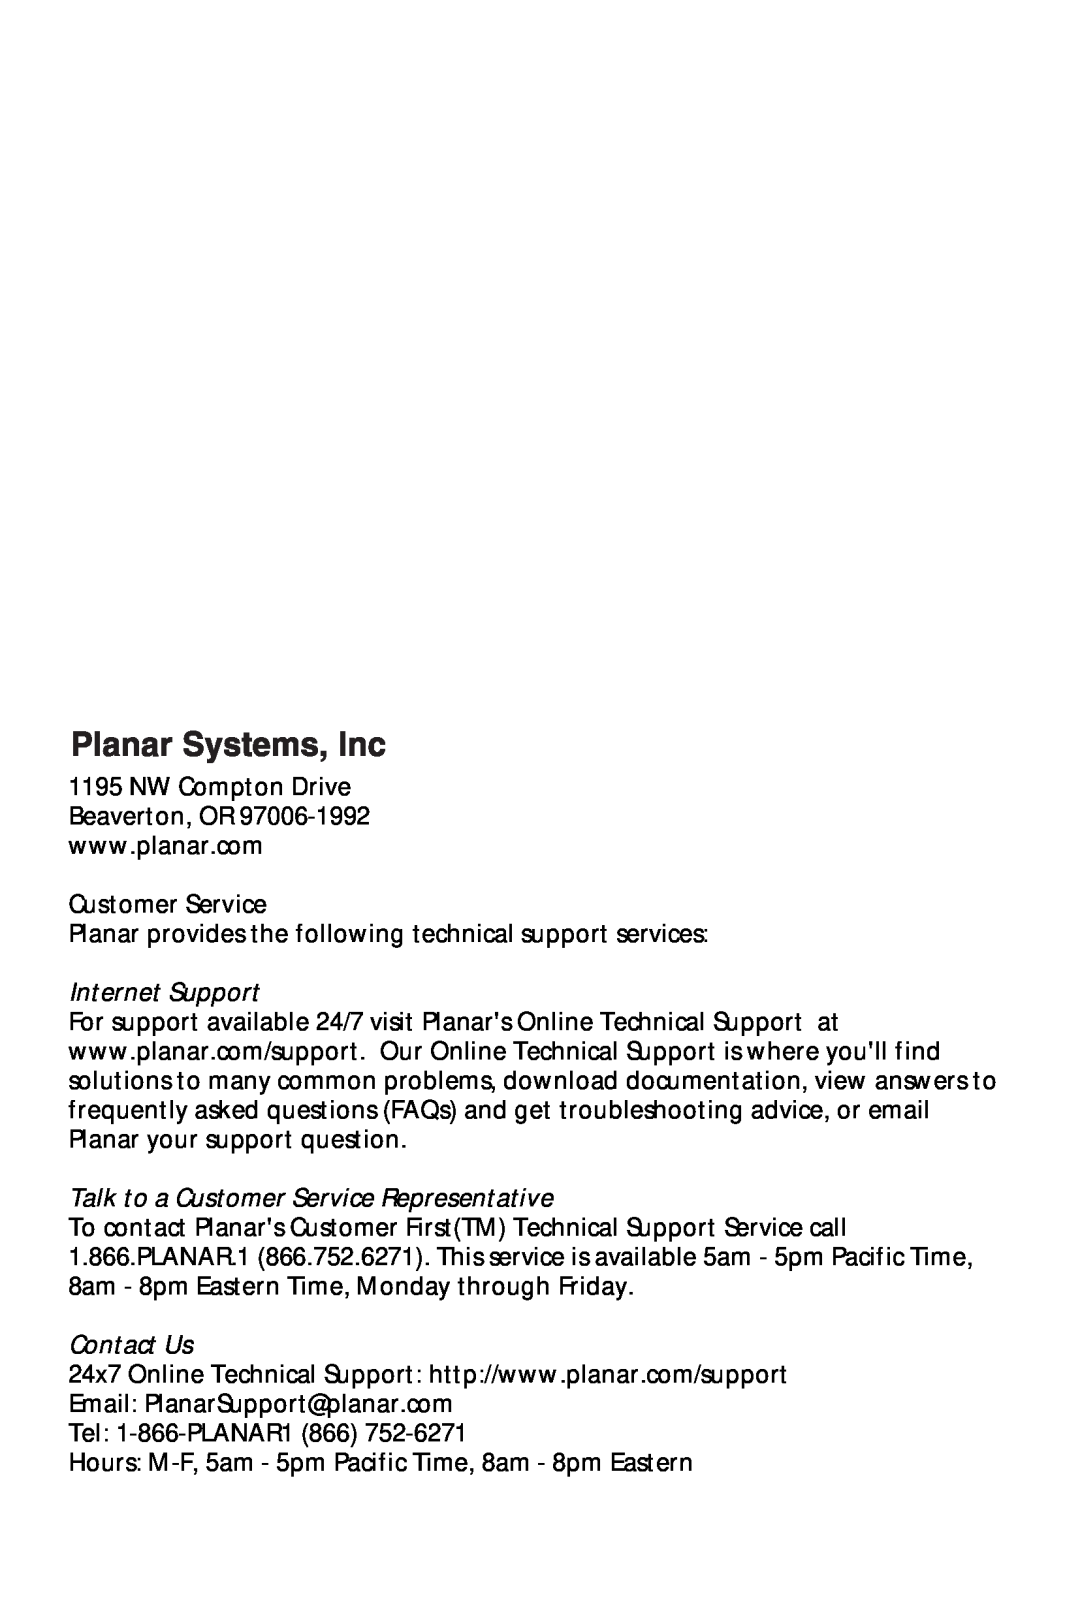 Planar PL1900 manual Internet Support, Talk to a Customer Service Representative, Contact Us 